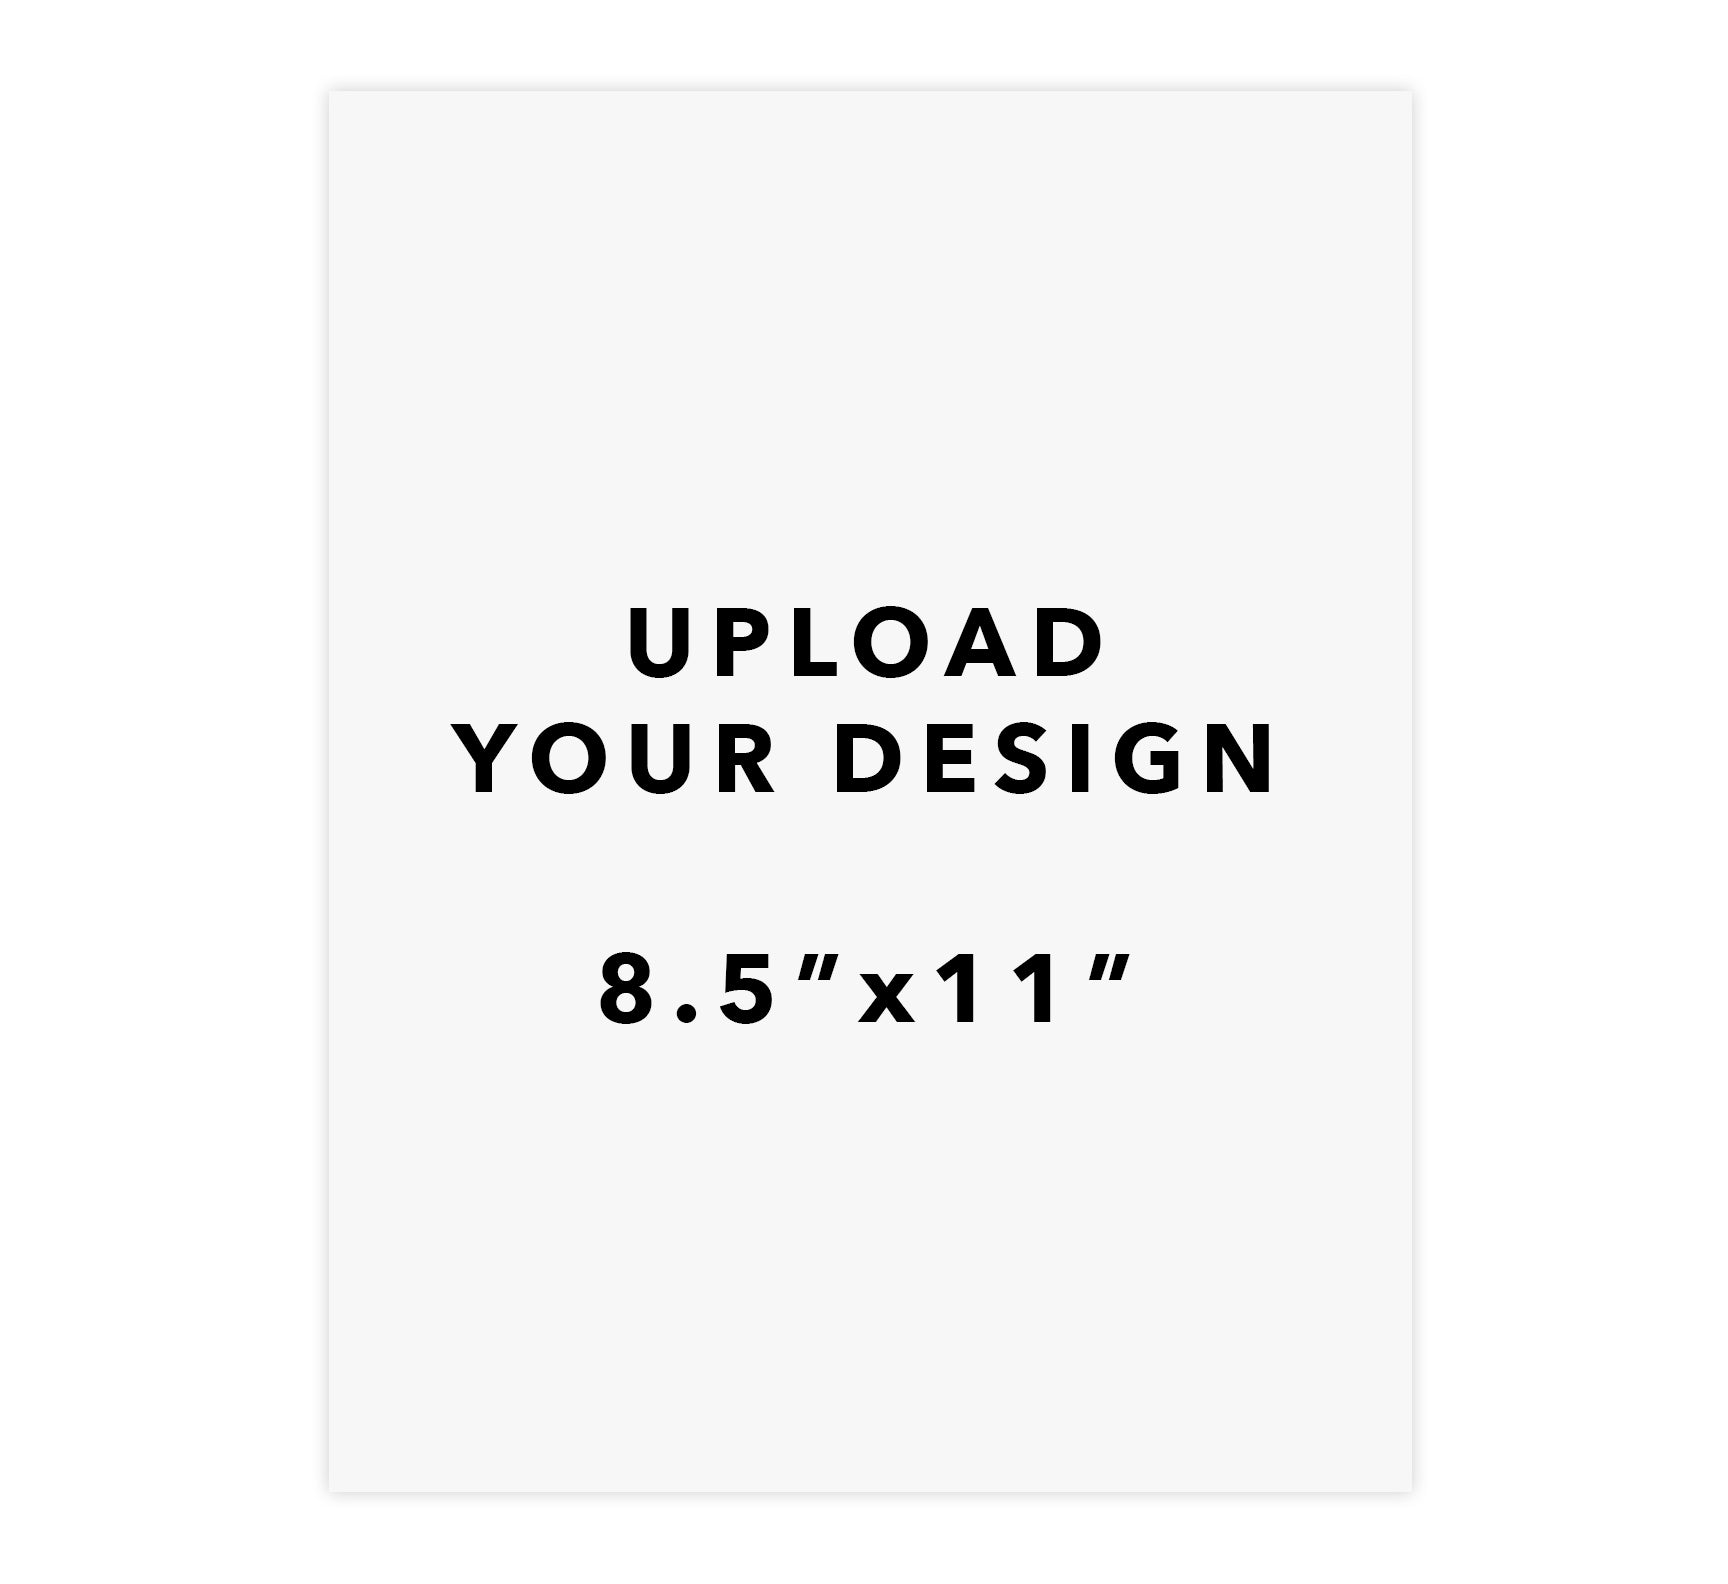 Upload Your Design - 8.5"x11"